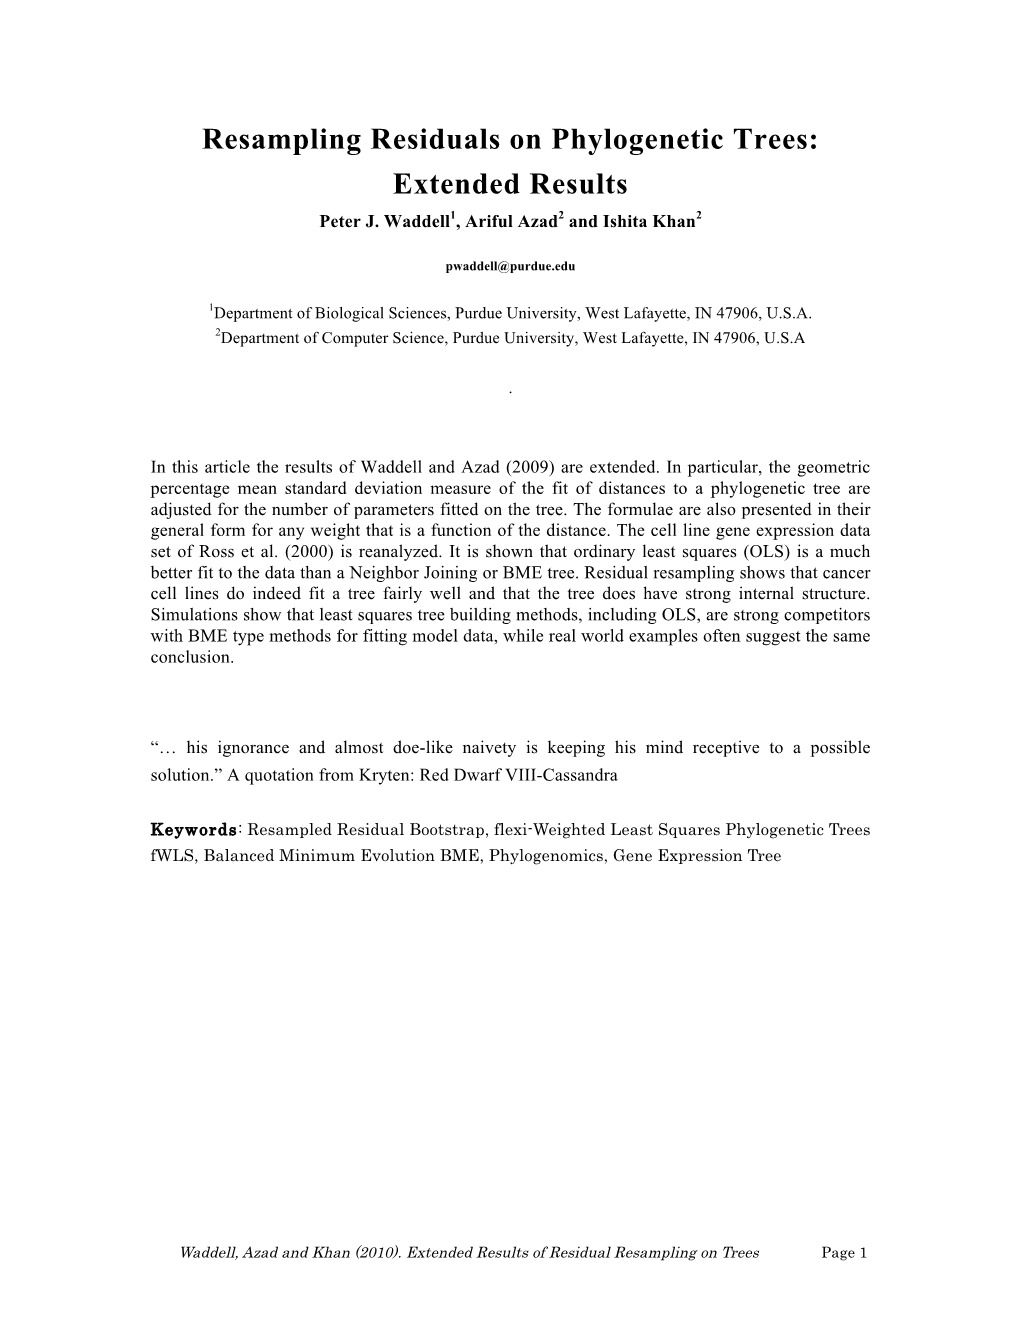 Resampling Residuals on Phylogenetic Trees: Extended Results Peter J